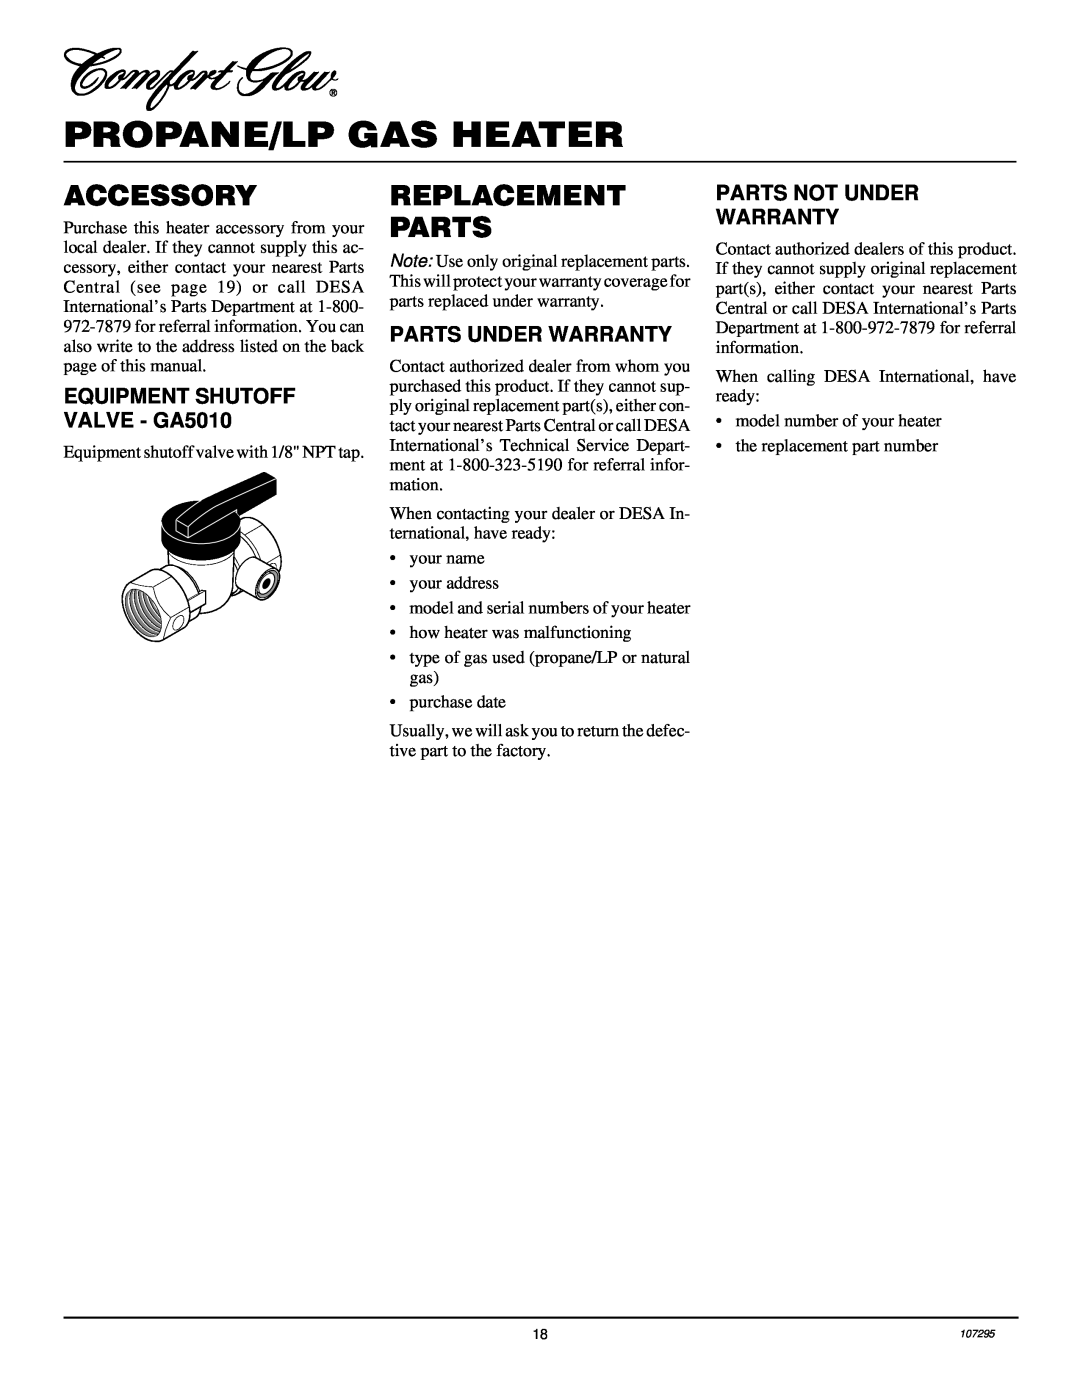 Desa CGS10P Accessory, Replacement Parts, EQUIPMENT SHUTOFF VALVE - GA5010, Parts Under Warranty, Parts Not Under Warranty 